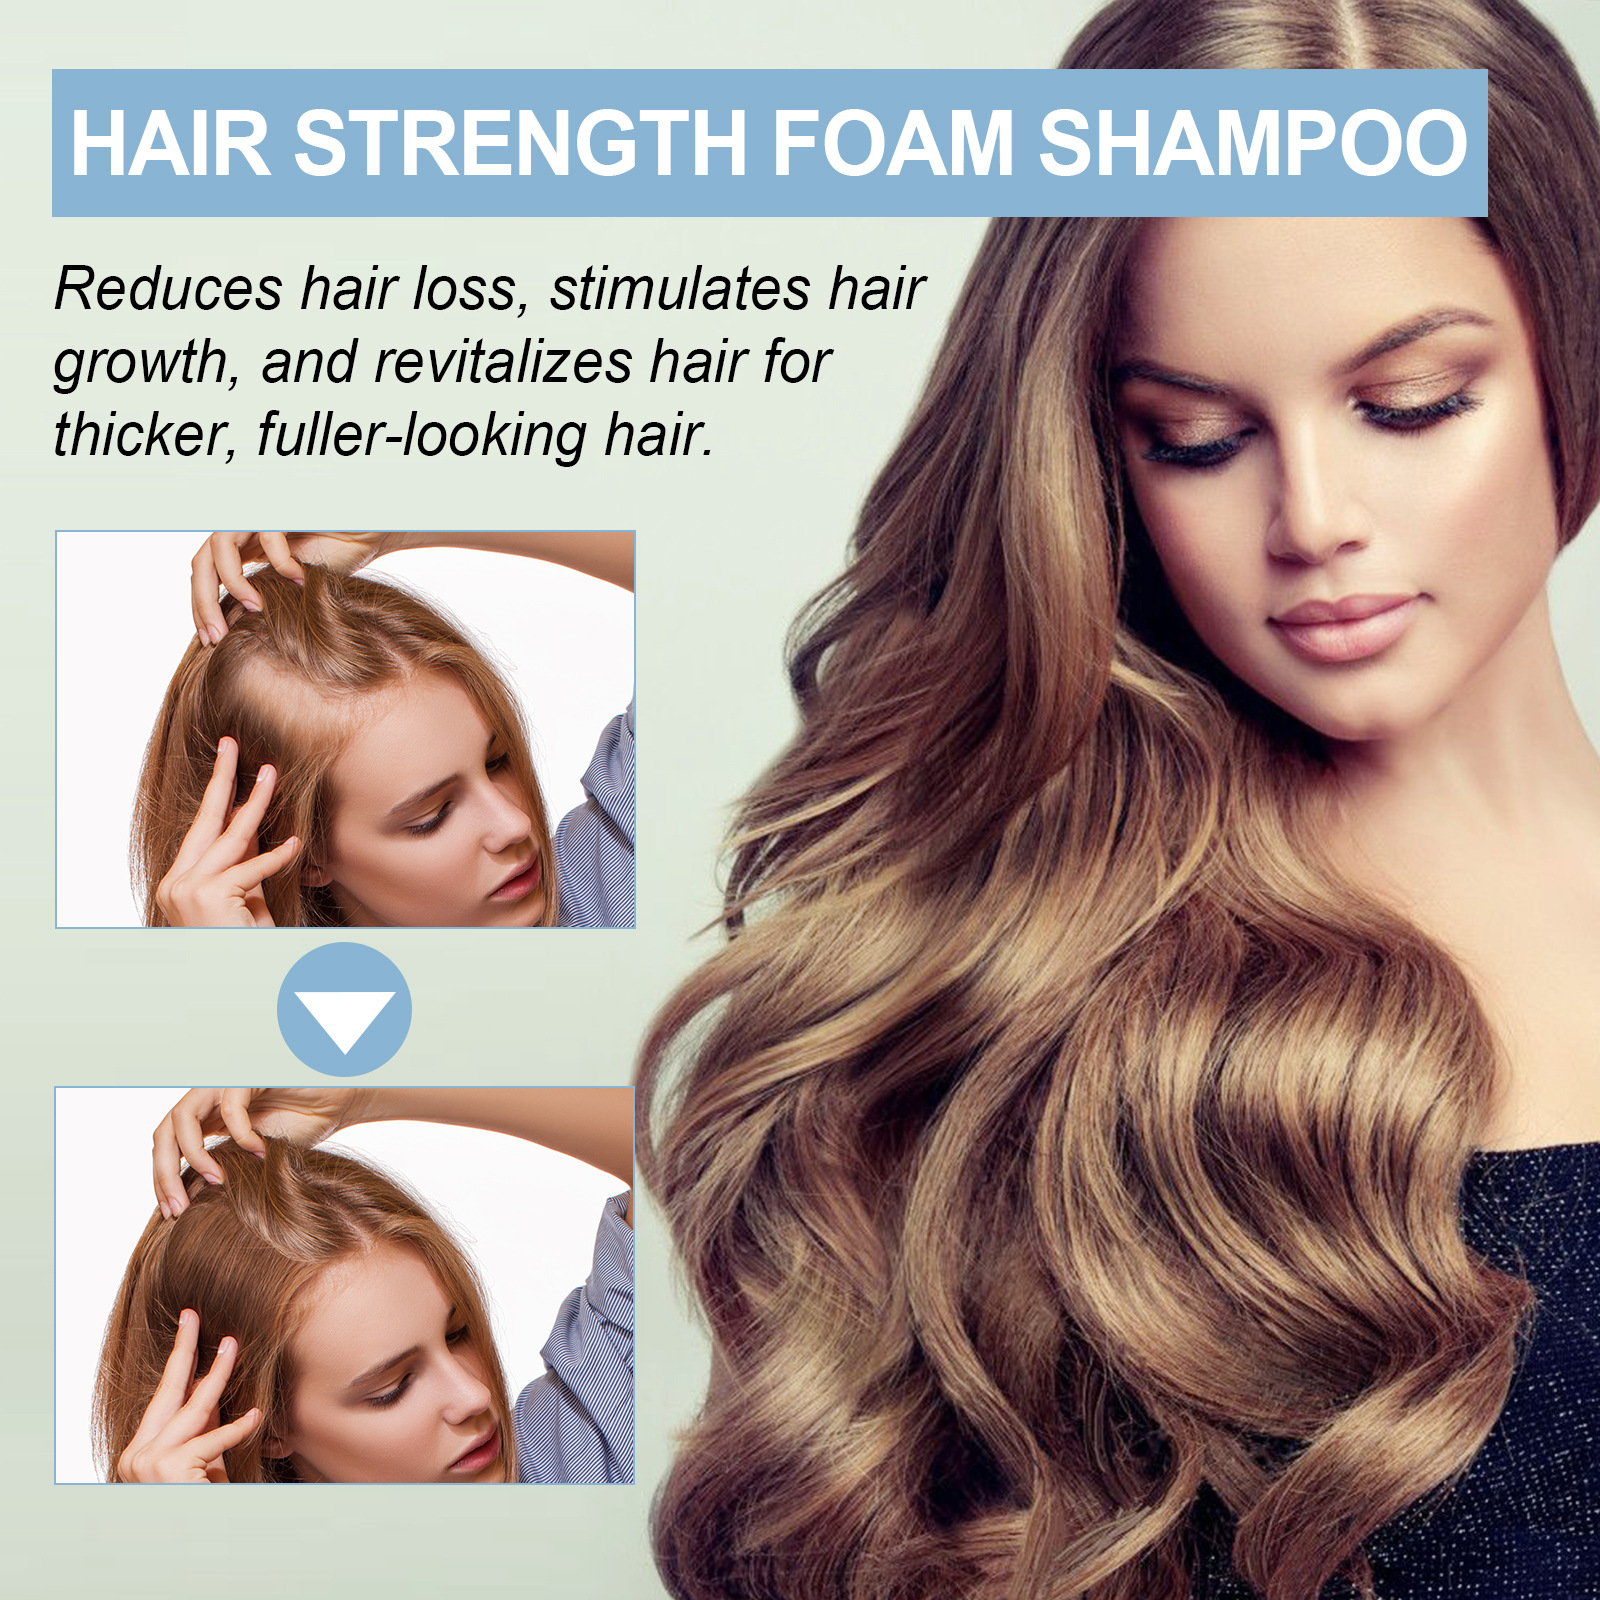 Eelhoe Dense Hair Foam Shampoo Cleansing Scalp Thick Hair Fixation Fluffy Soft Shampoo